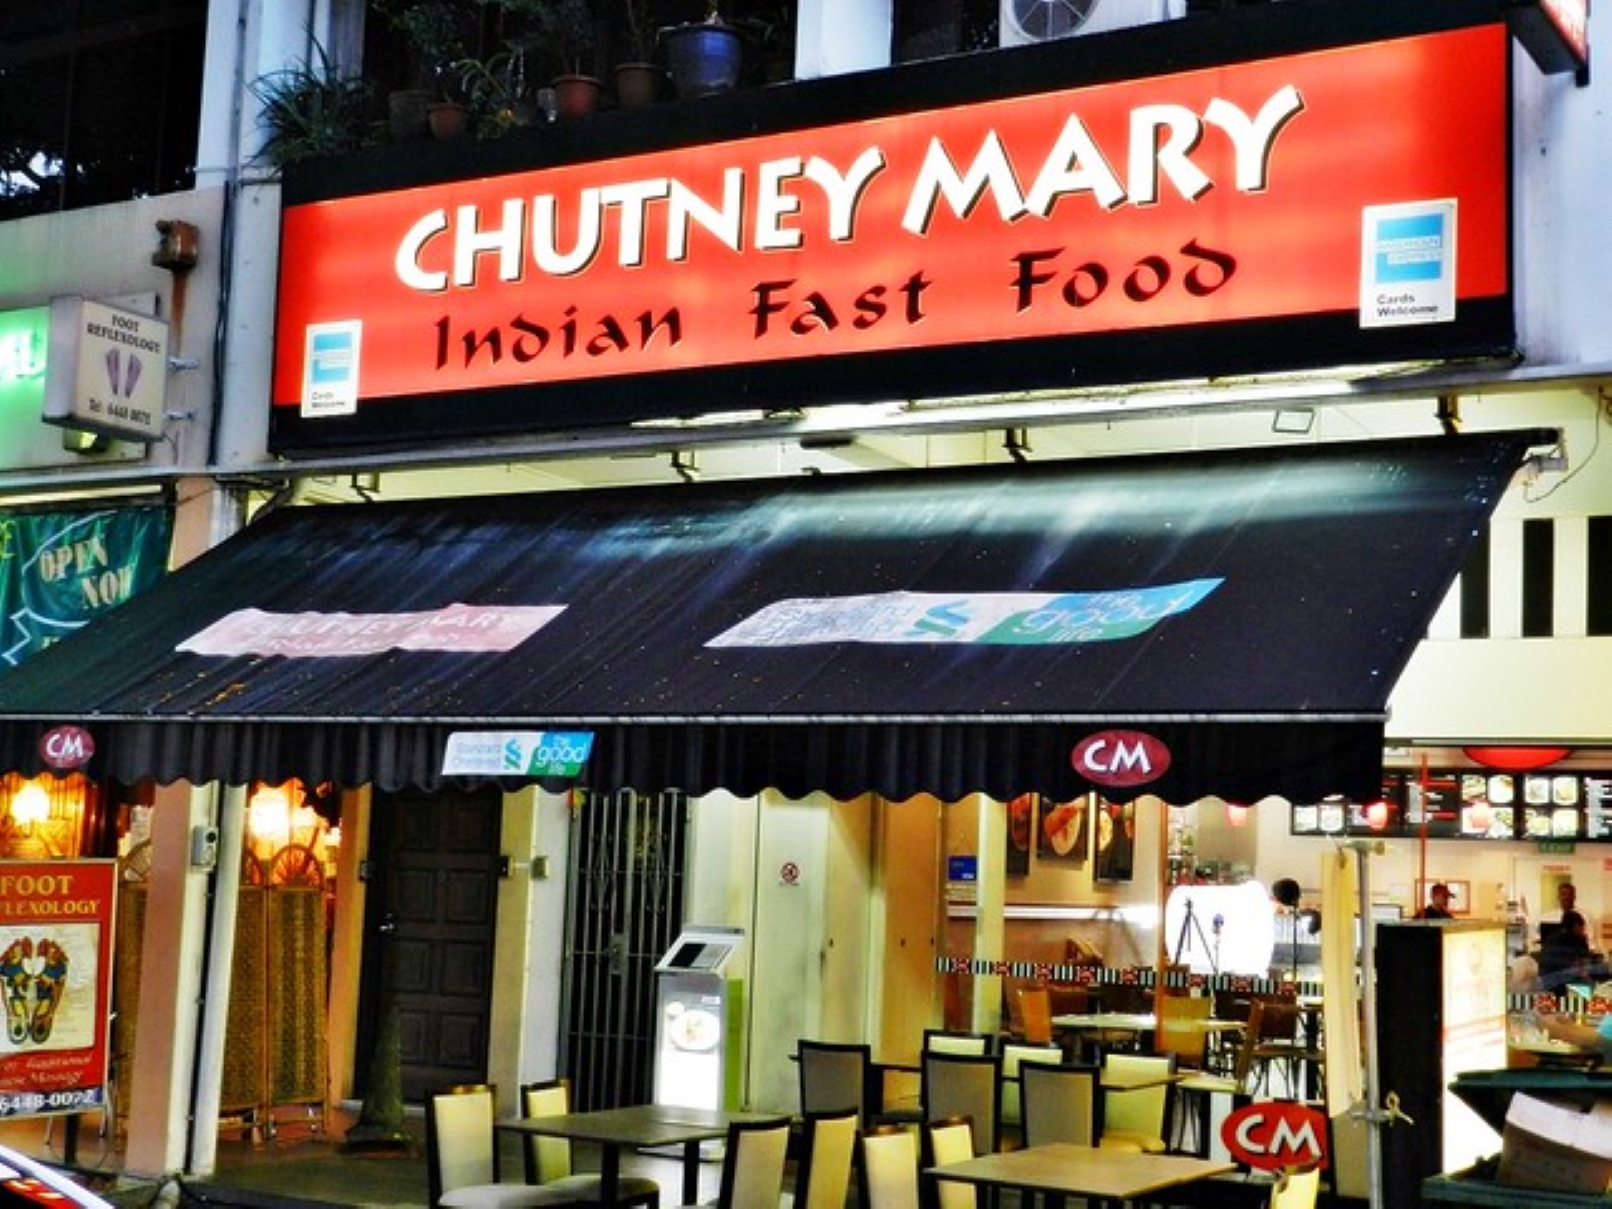 Chutney Mary Indian Fast Food at East Coast